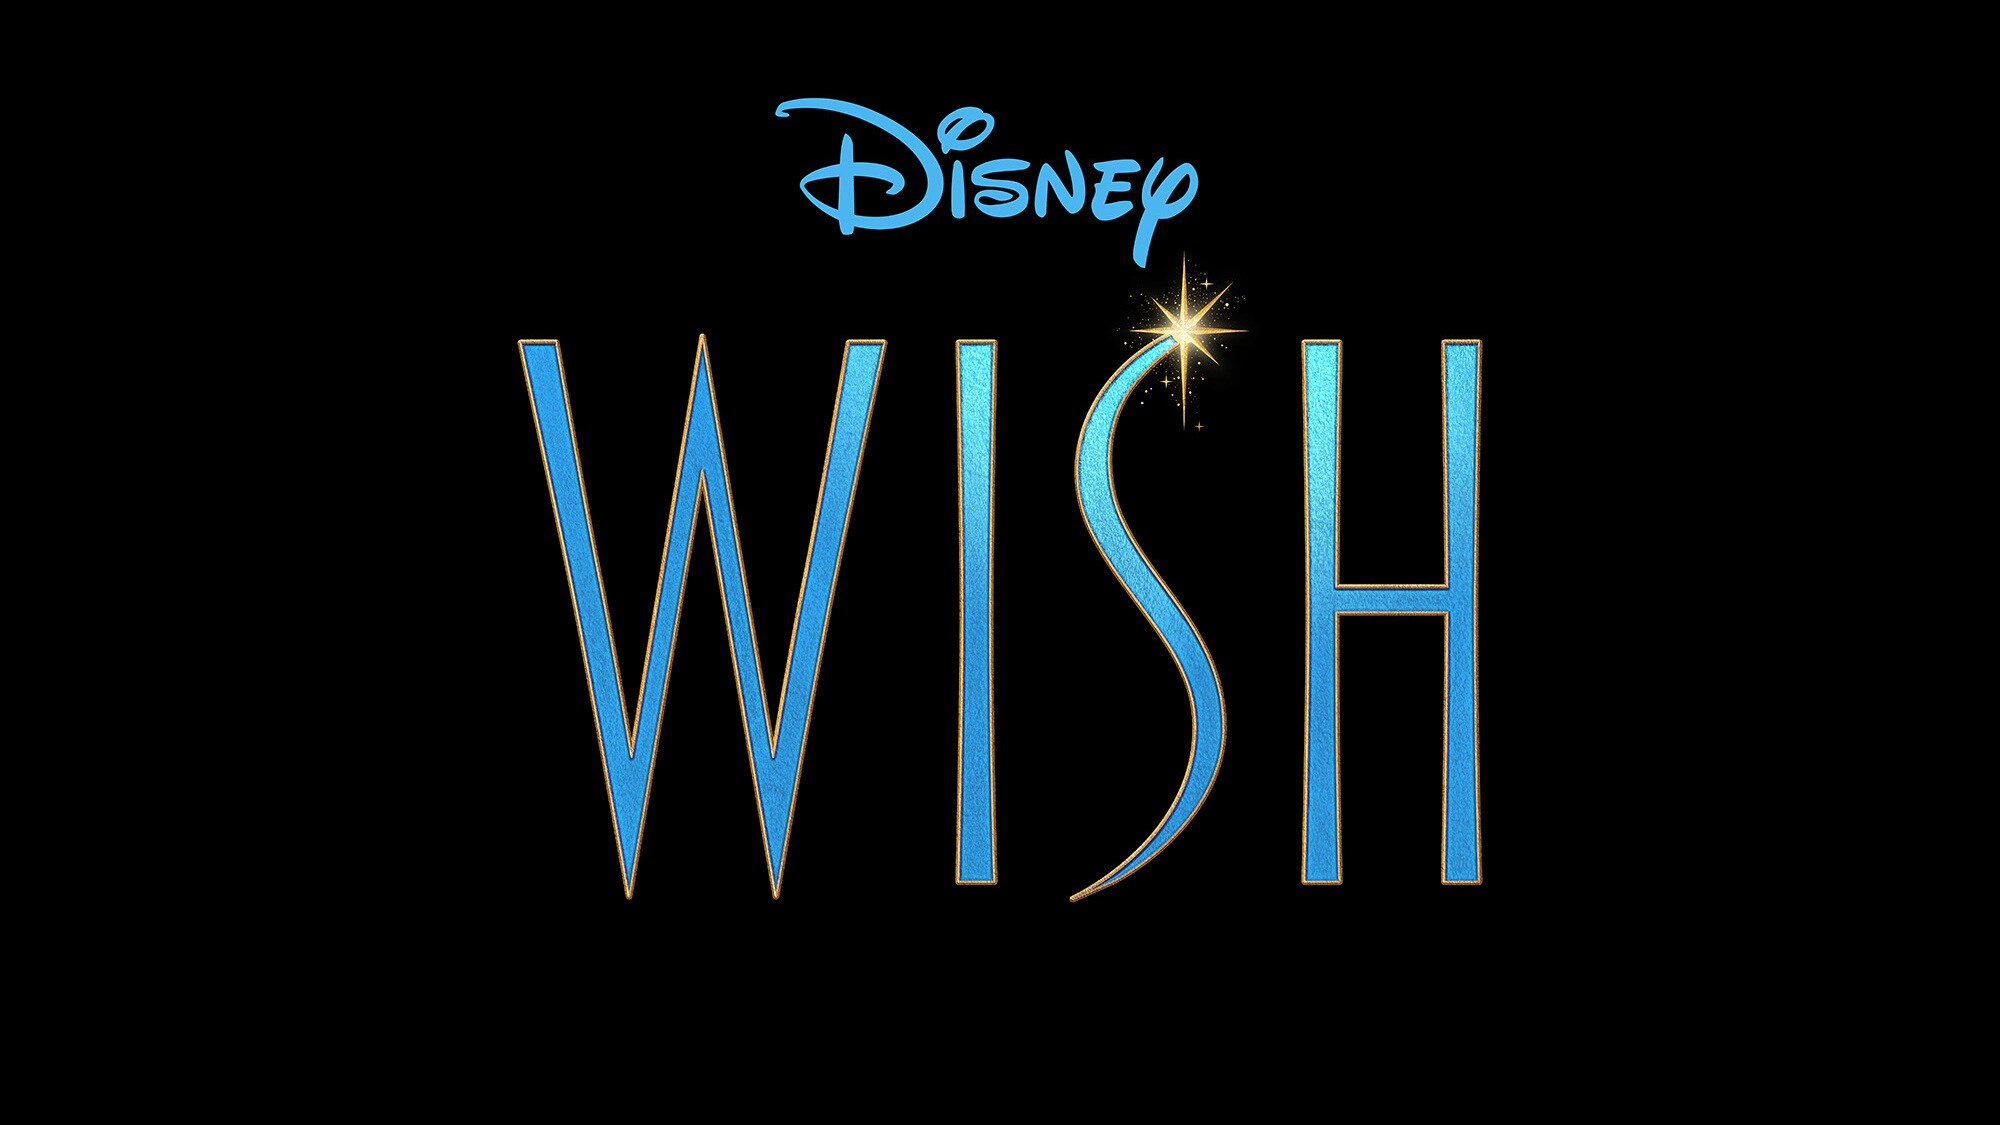 Walt Disney Animation Studios’ “Wish” to Make its Disney+ Debut April 3